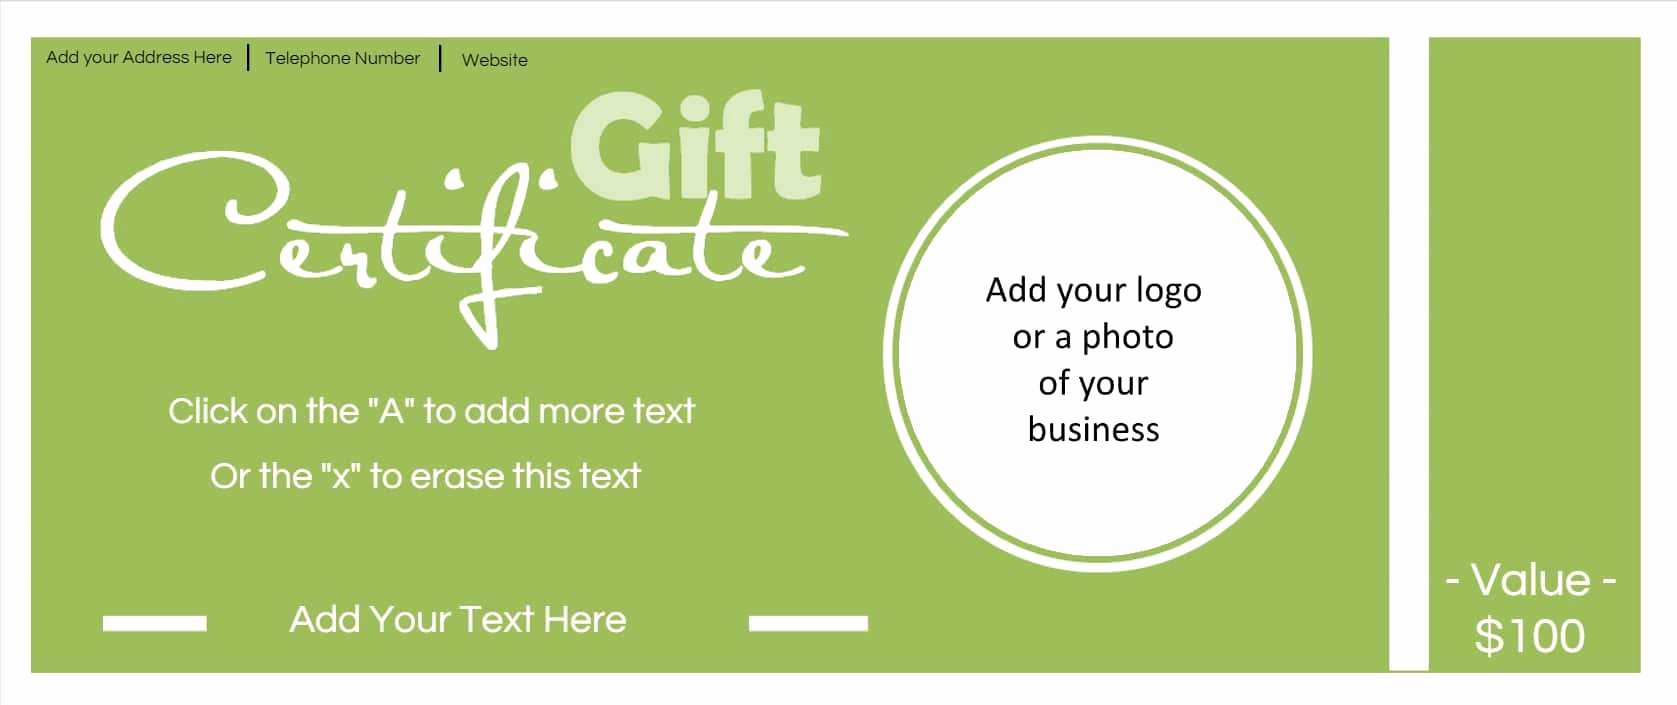 Custom Gift Certificate Template Free Fresh Gift Certificate Template with Logo